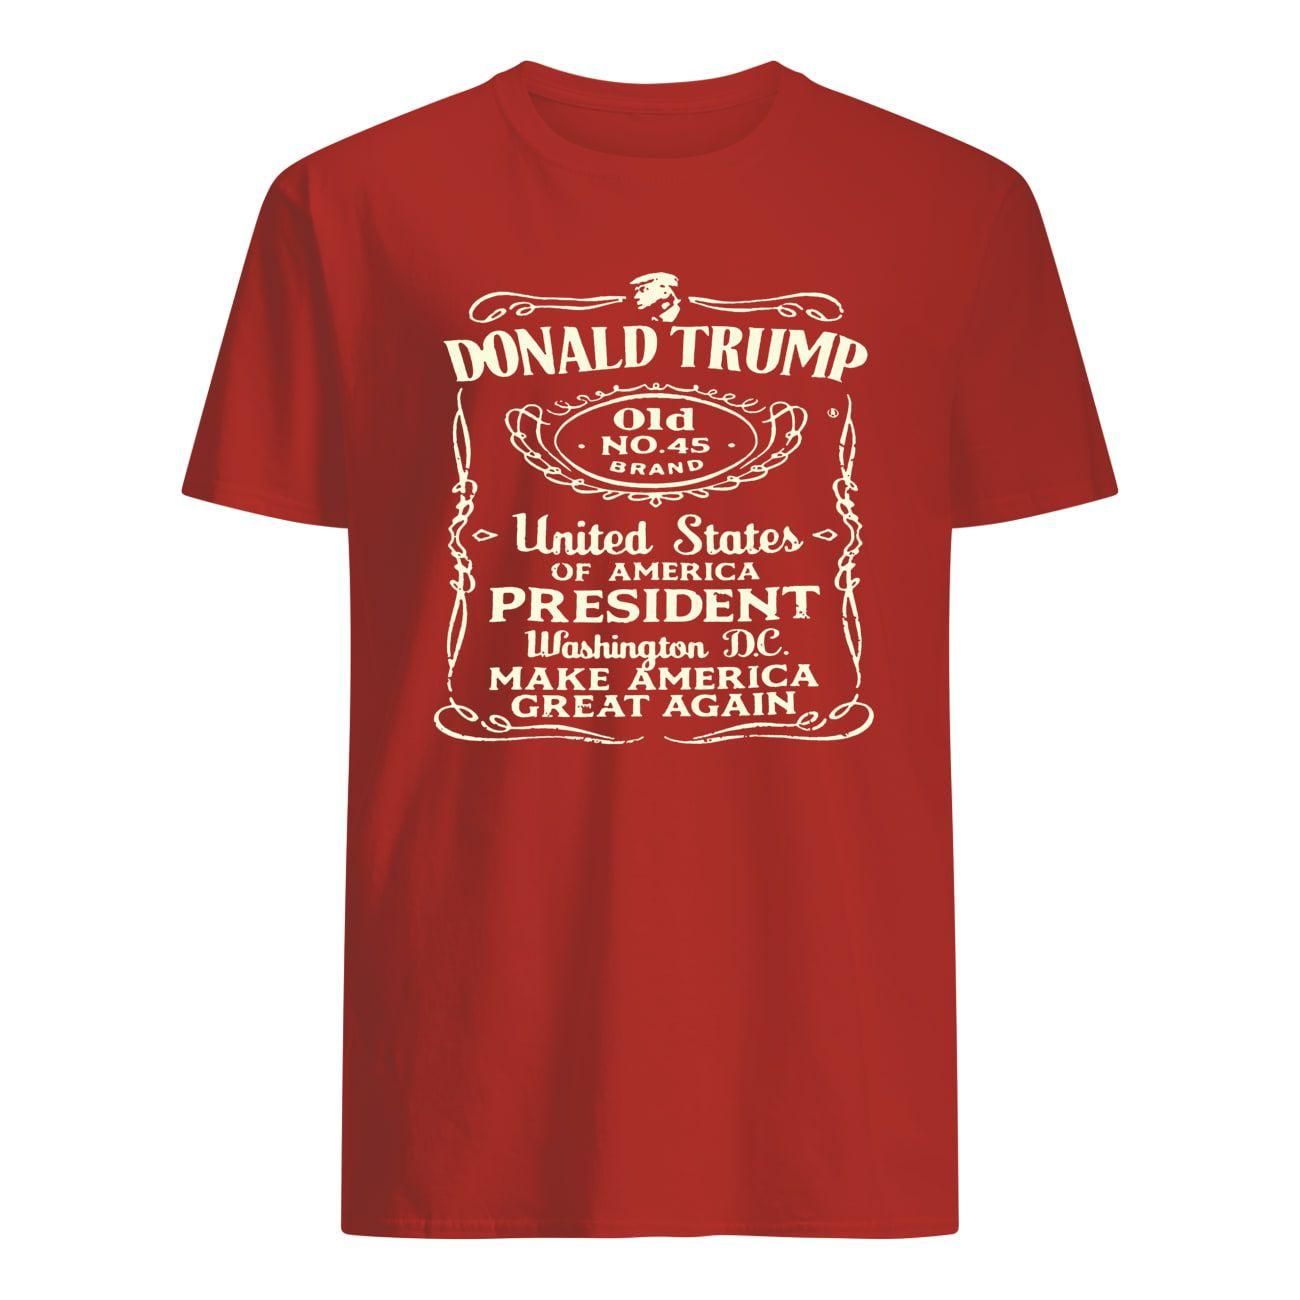 19051333mofebxh Donald trump old no 45 brand united states of america president washington DC make america great again shirt Classic Men's T-Shirt